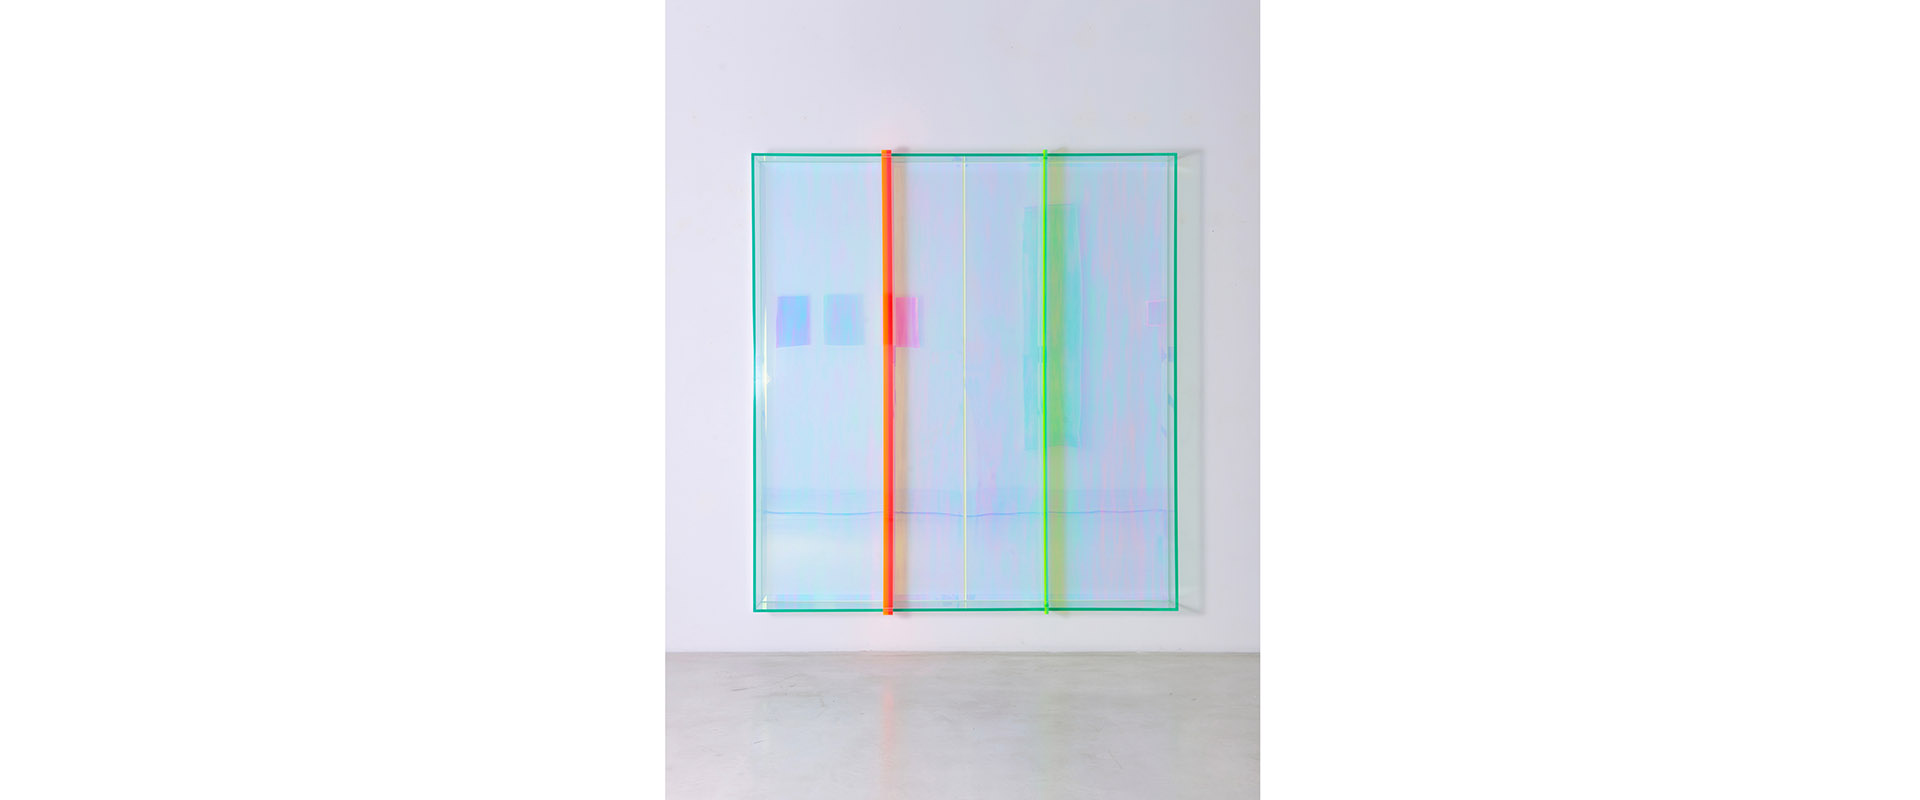 colormirror rainbow 2 two together crosses - 2019, Acrylglas, fluoreszierend, 180 x 168 x 18 cm